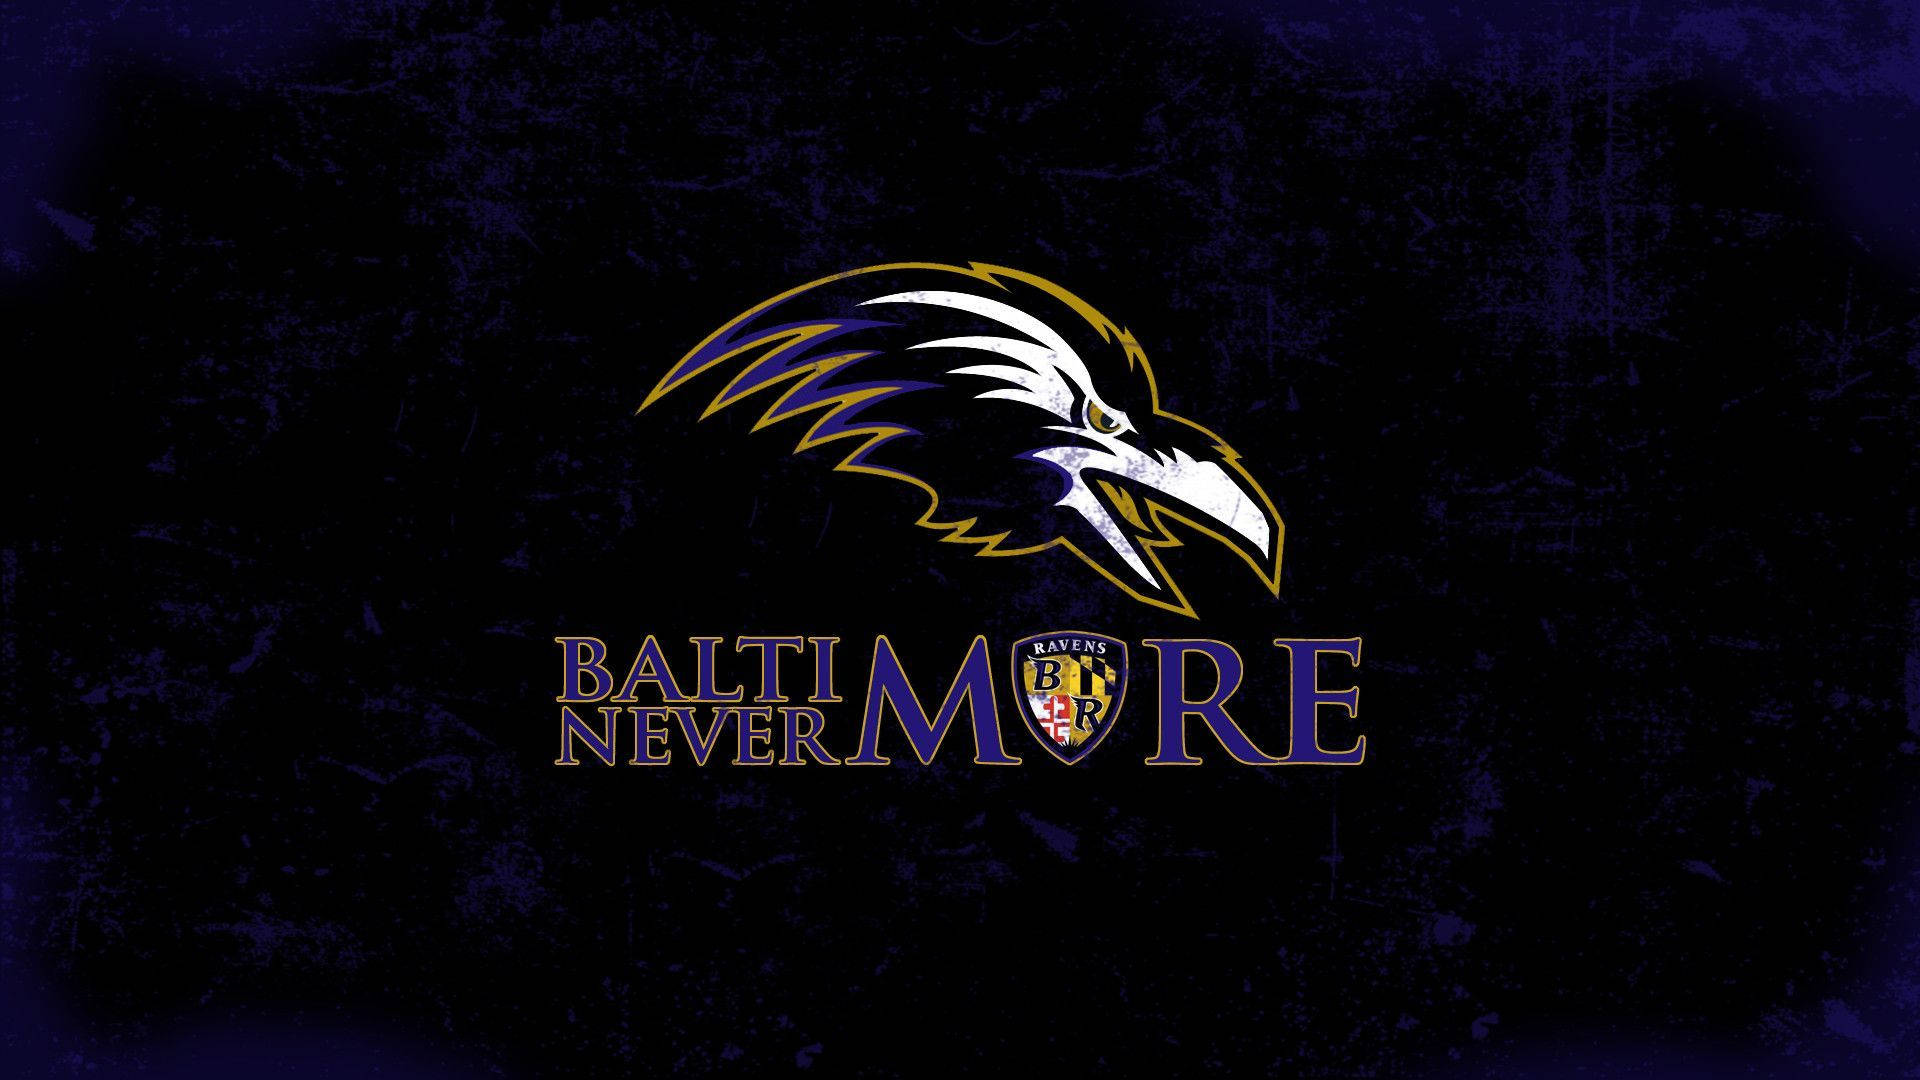 Baltimore Ravens Nevermore Poster Wallpaper